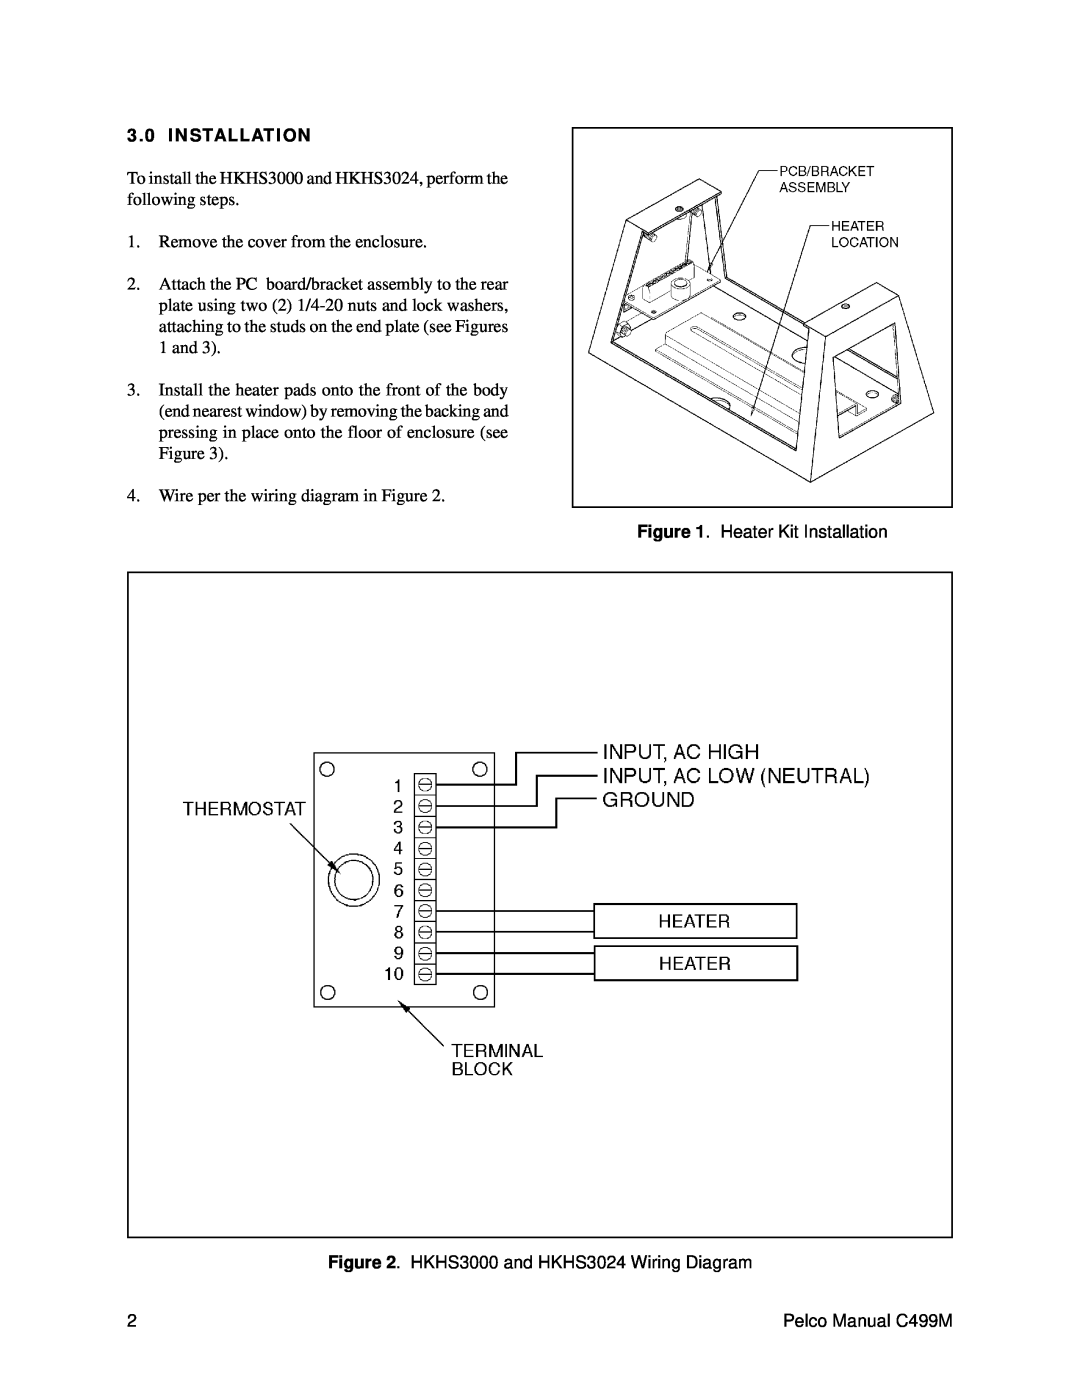 Pelco HKHS3024 operation manual Installation 